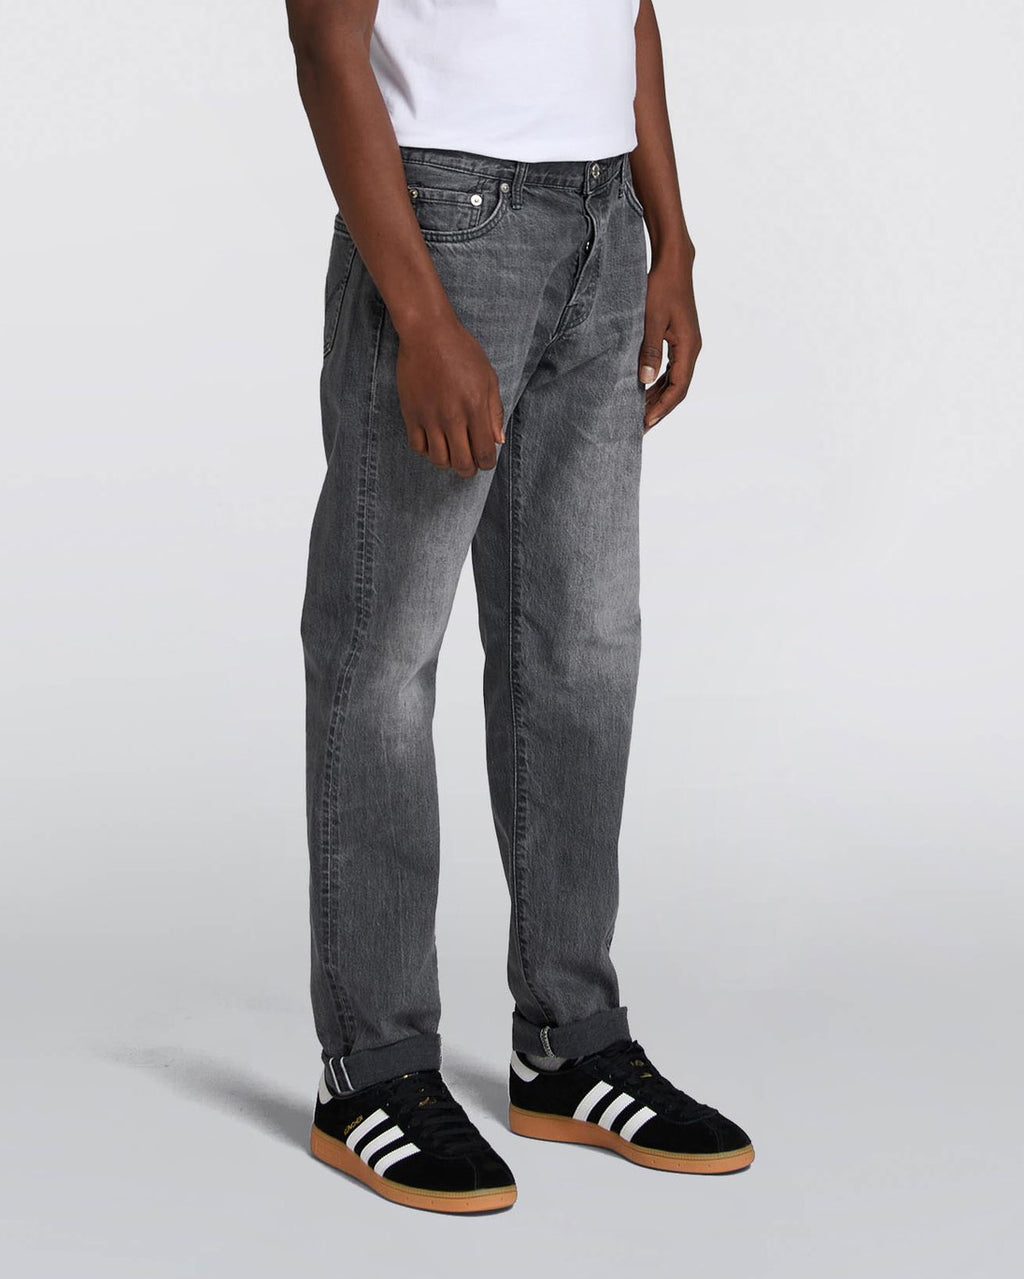 Buy theEdwin Slim Tapered Jeans Yoshiko- Light Used@Union Clothing